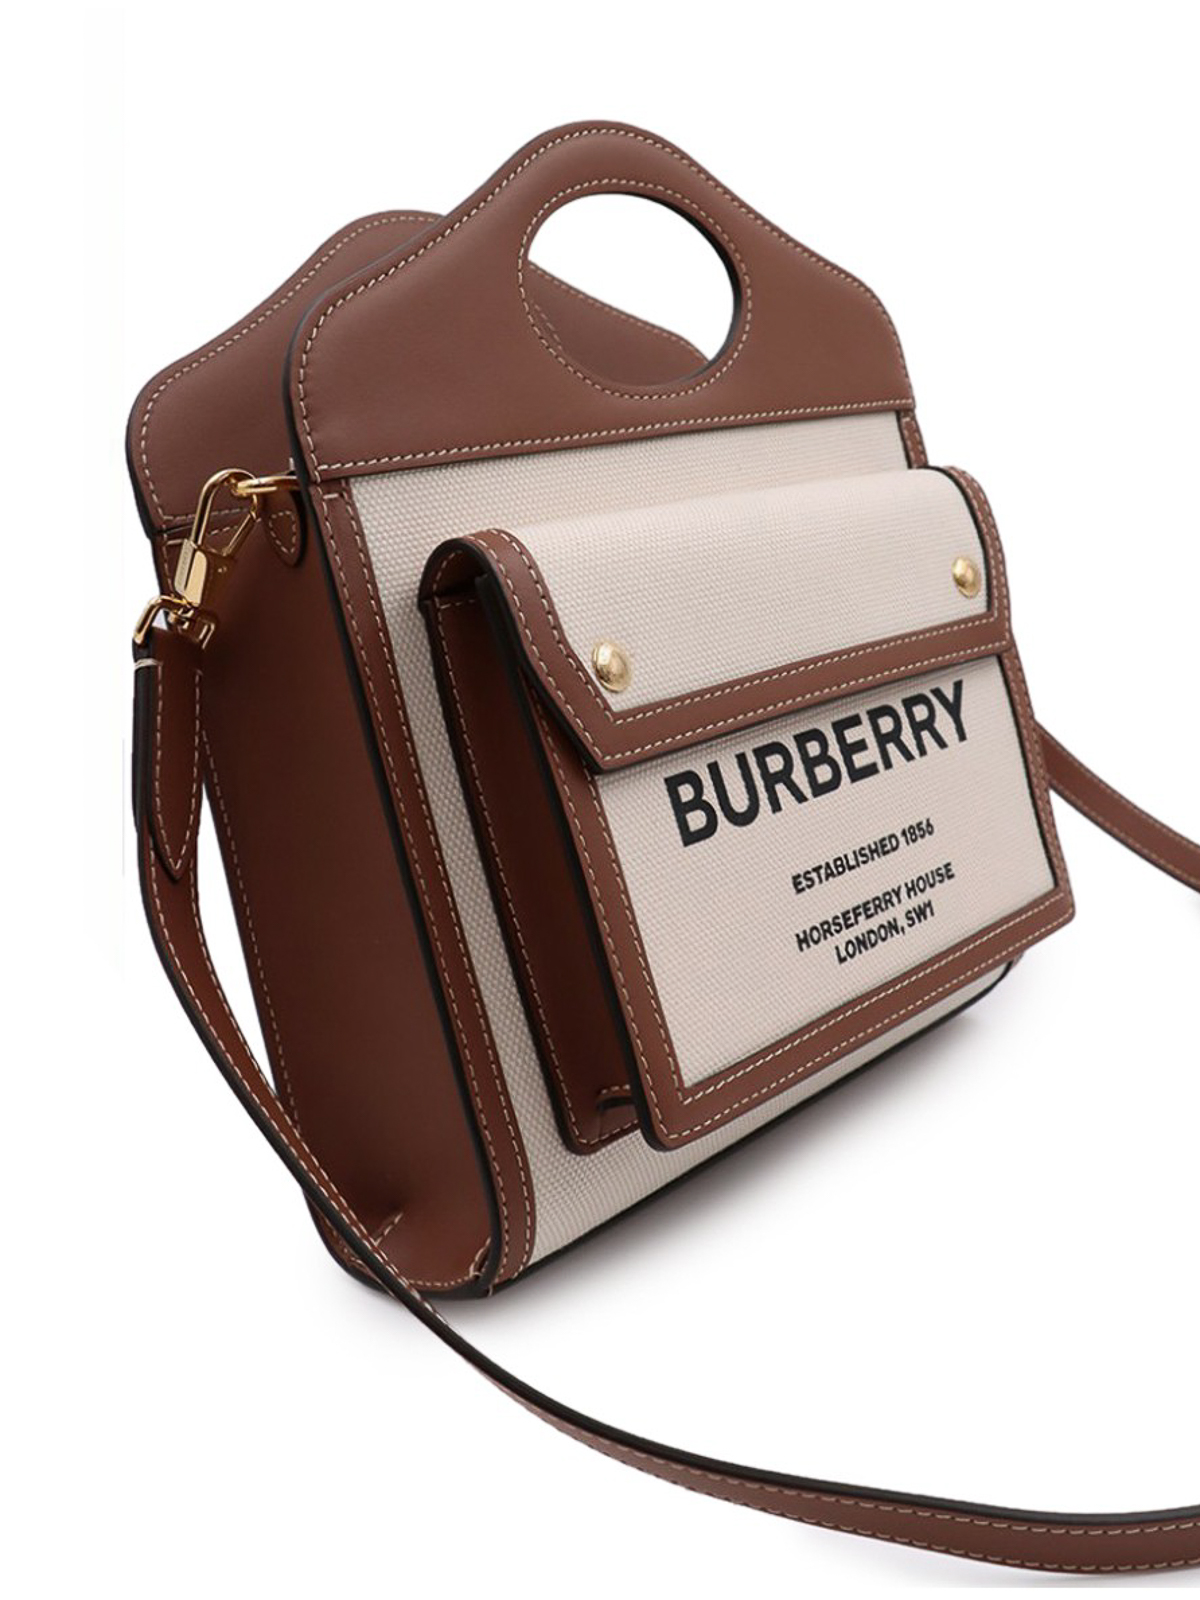 Burberry Women's Leather Shoulder Bag Bordeaux BF556343 | eBay